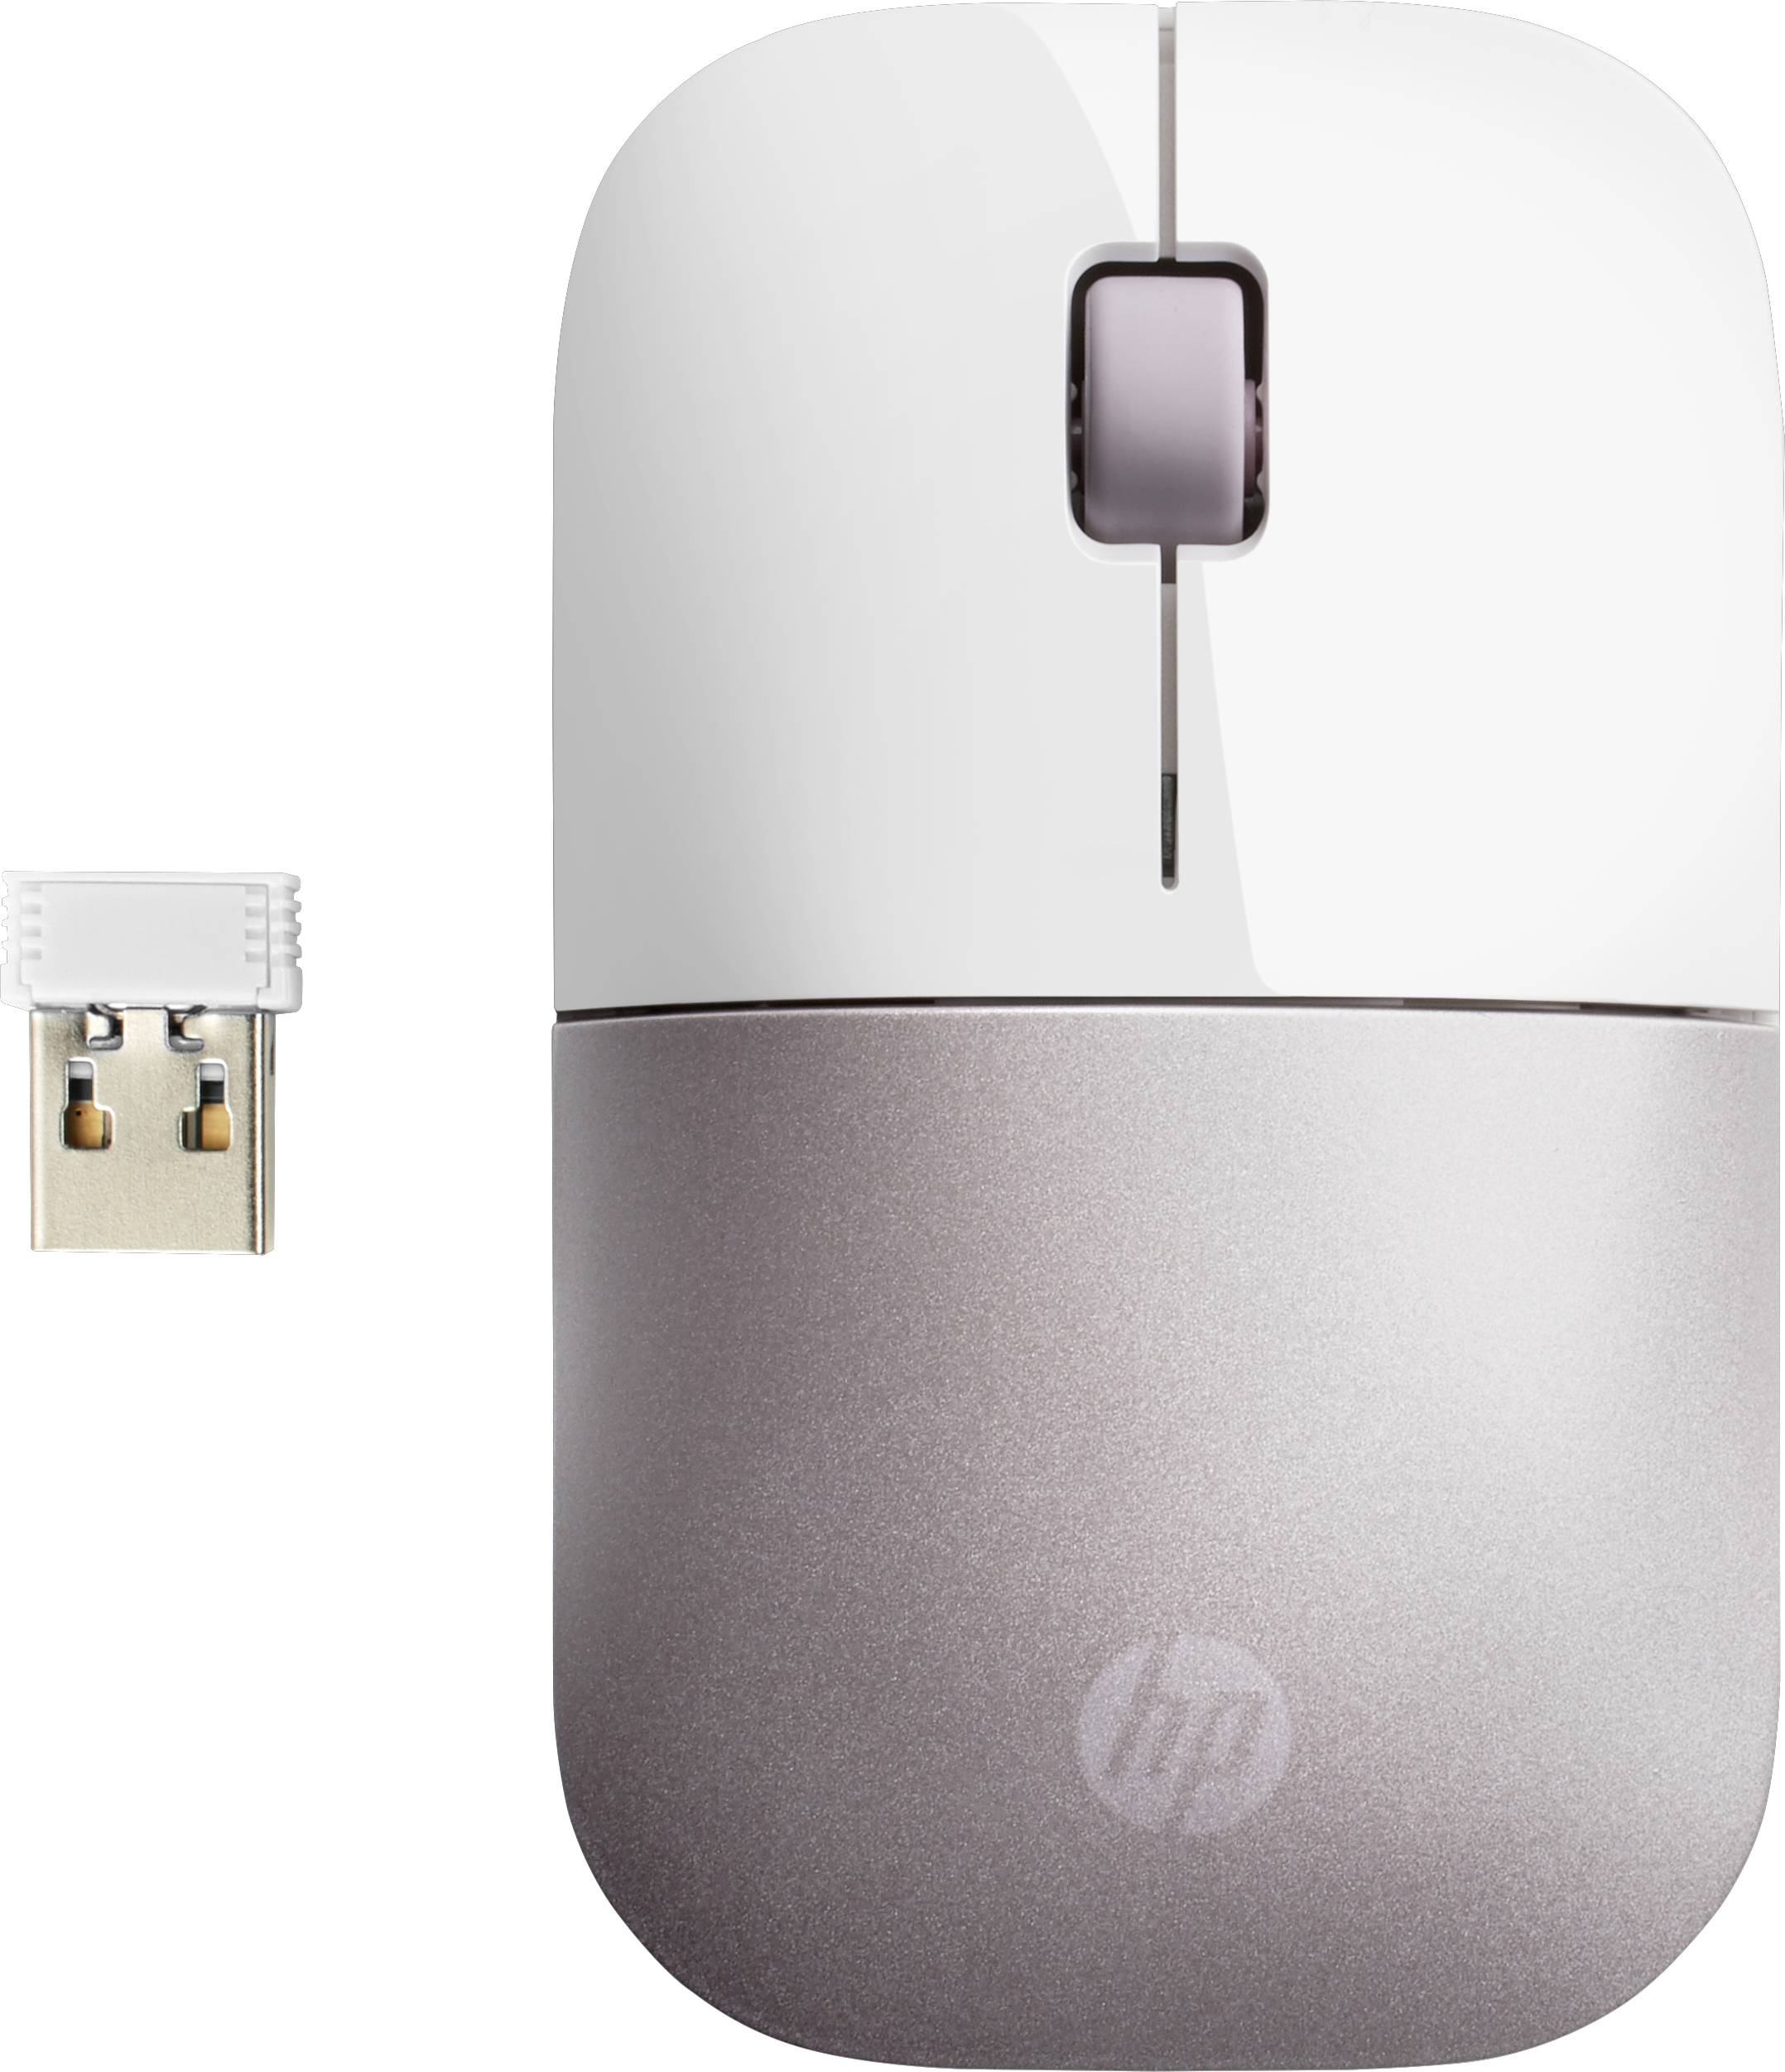 HP Z3700 Wireless Mouse